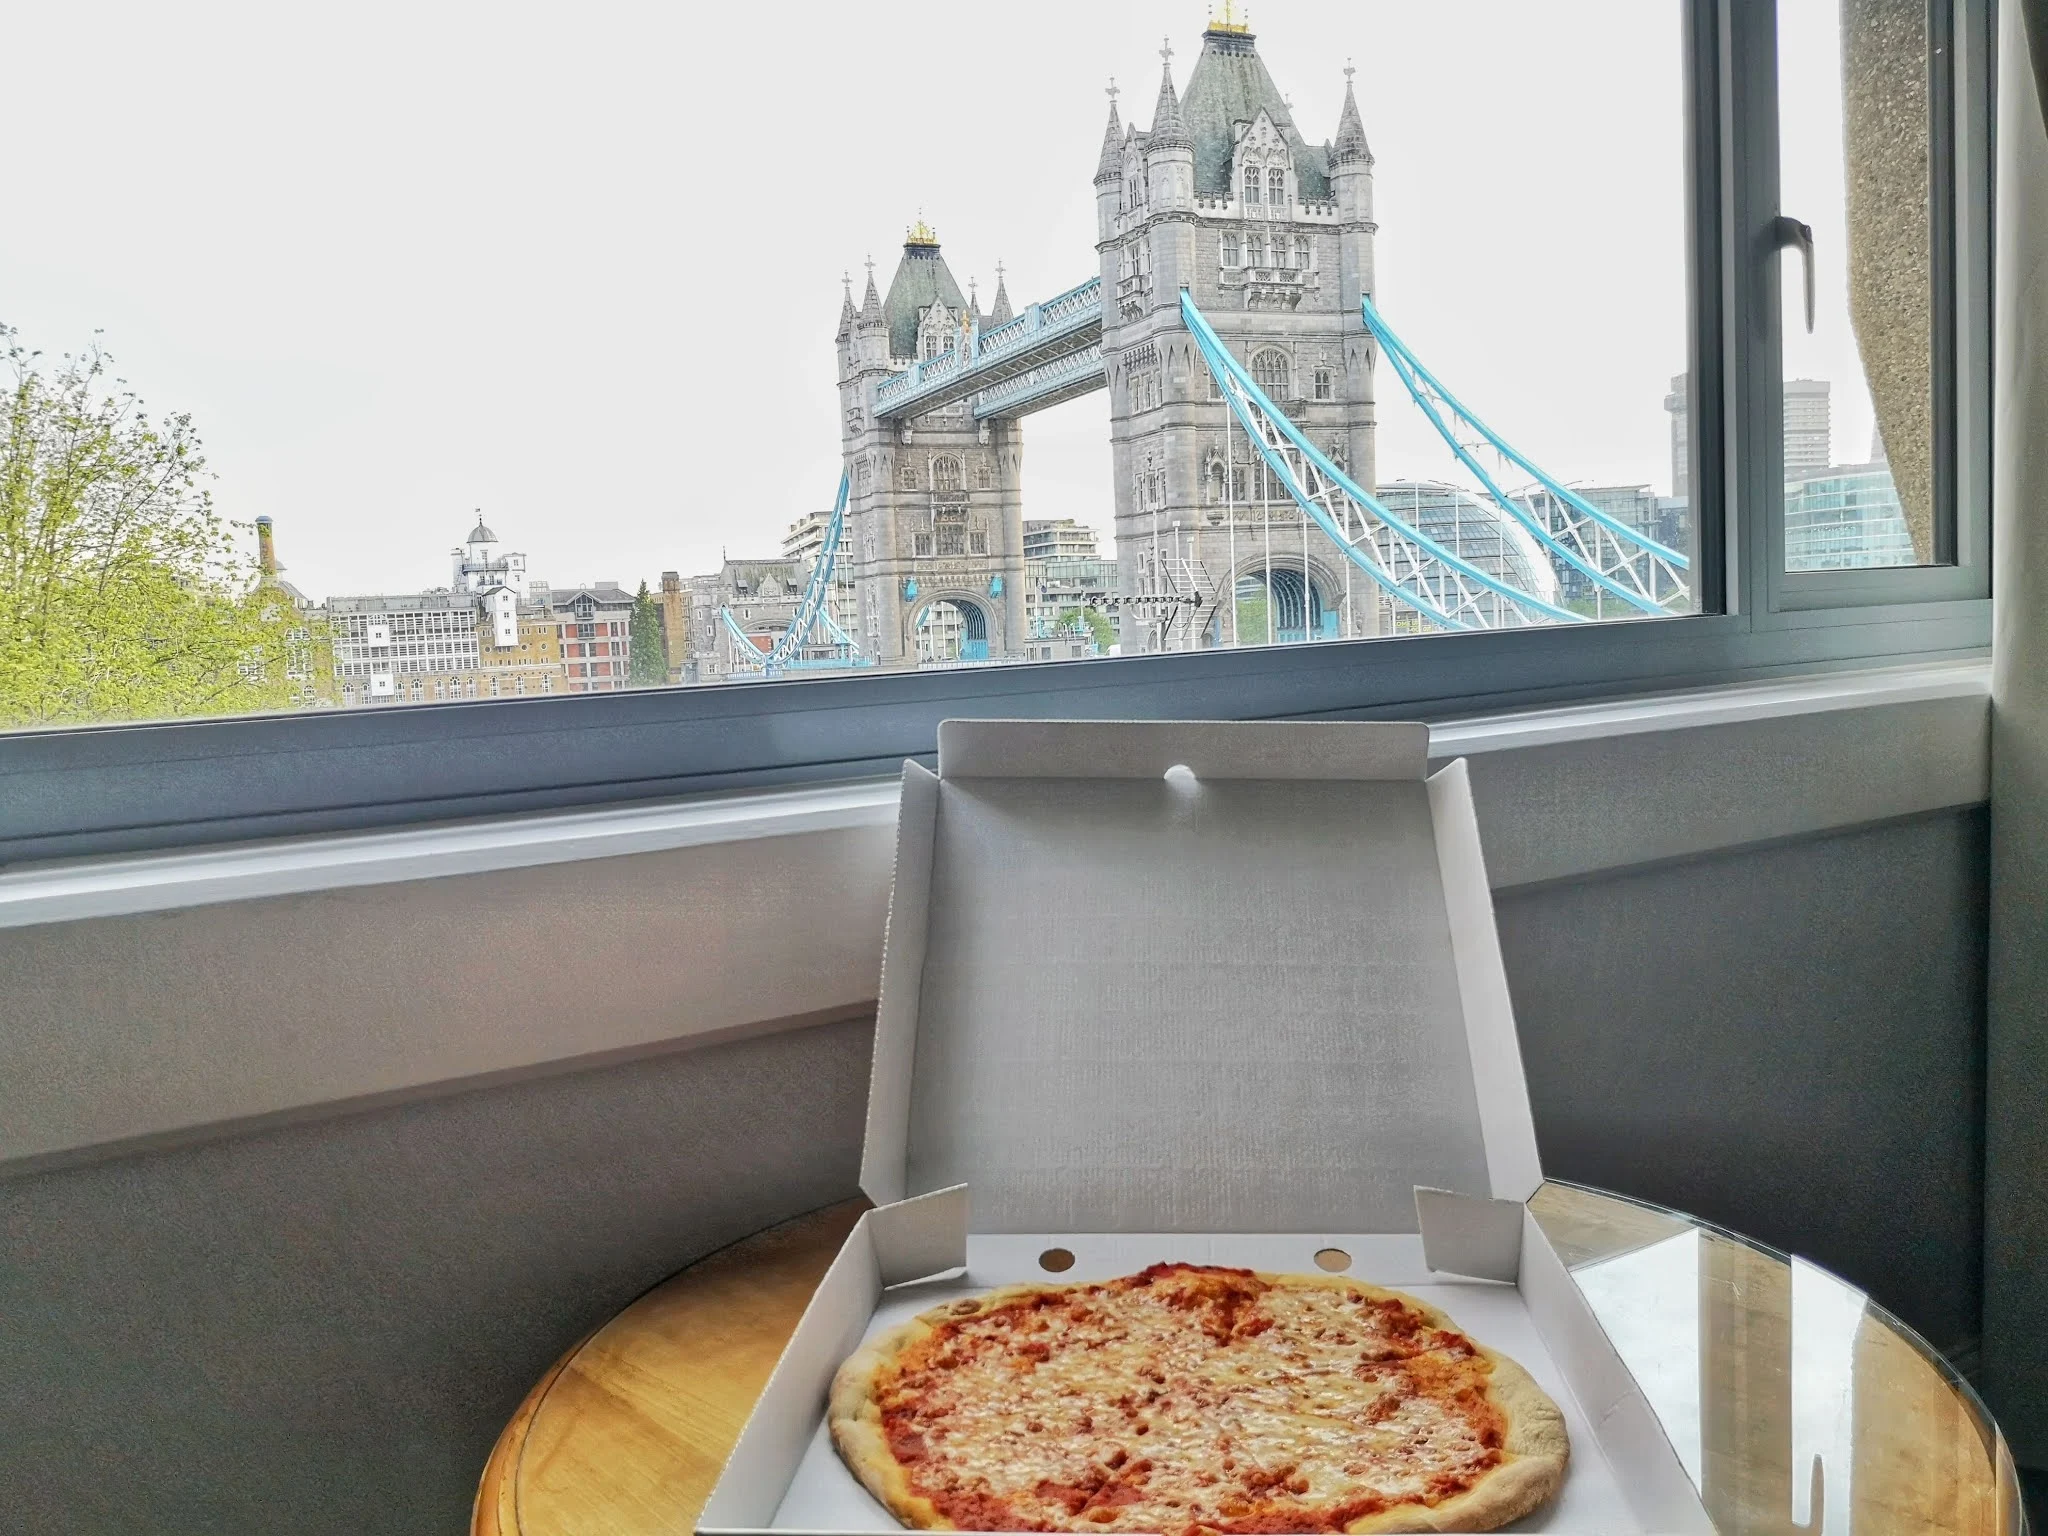 Pizza in london